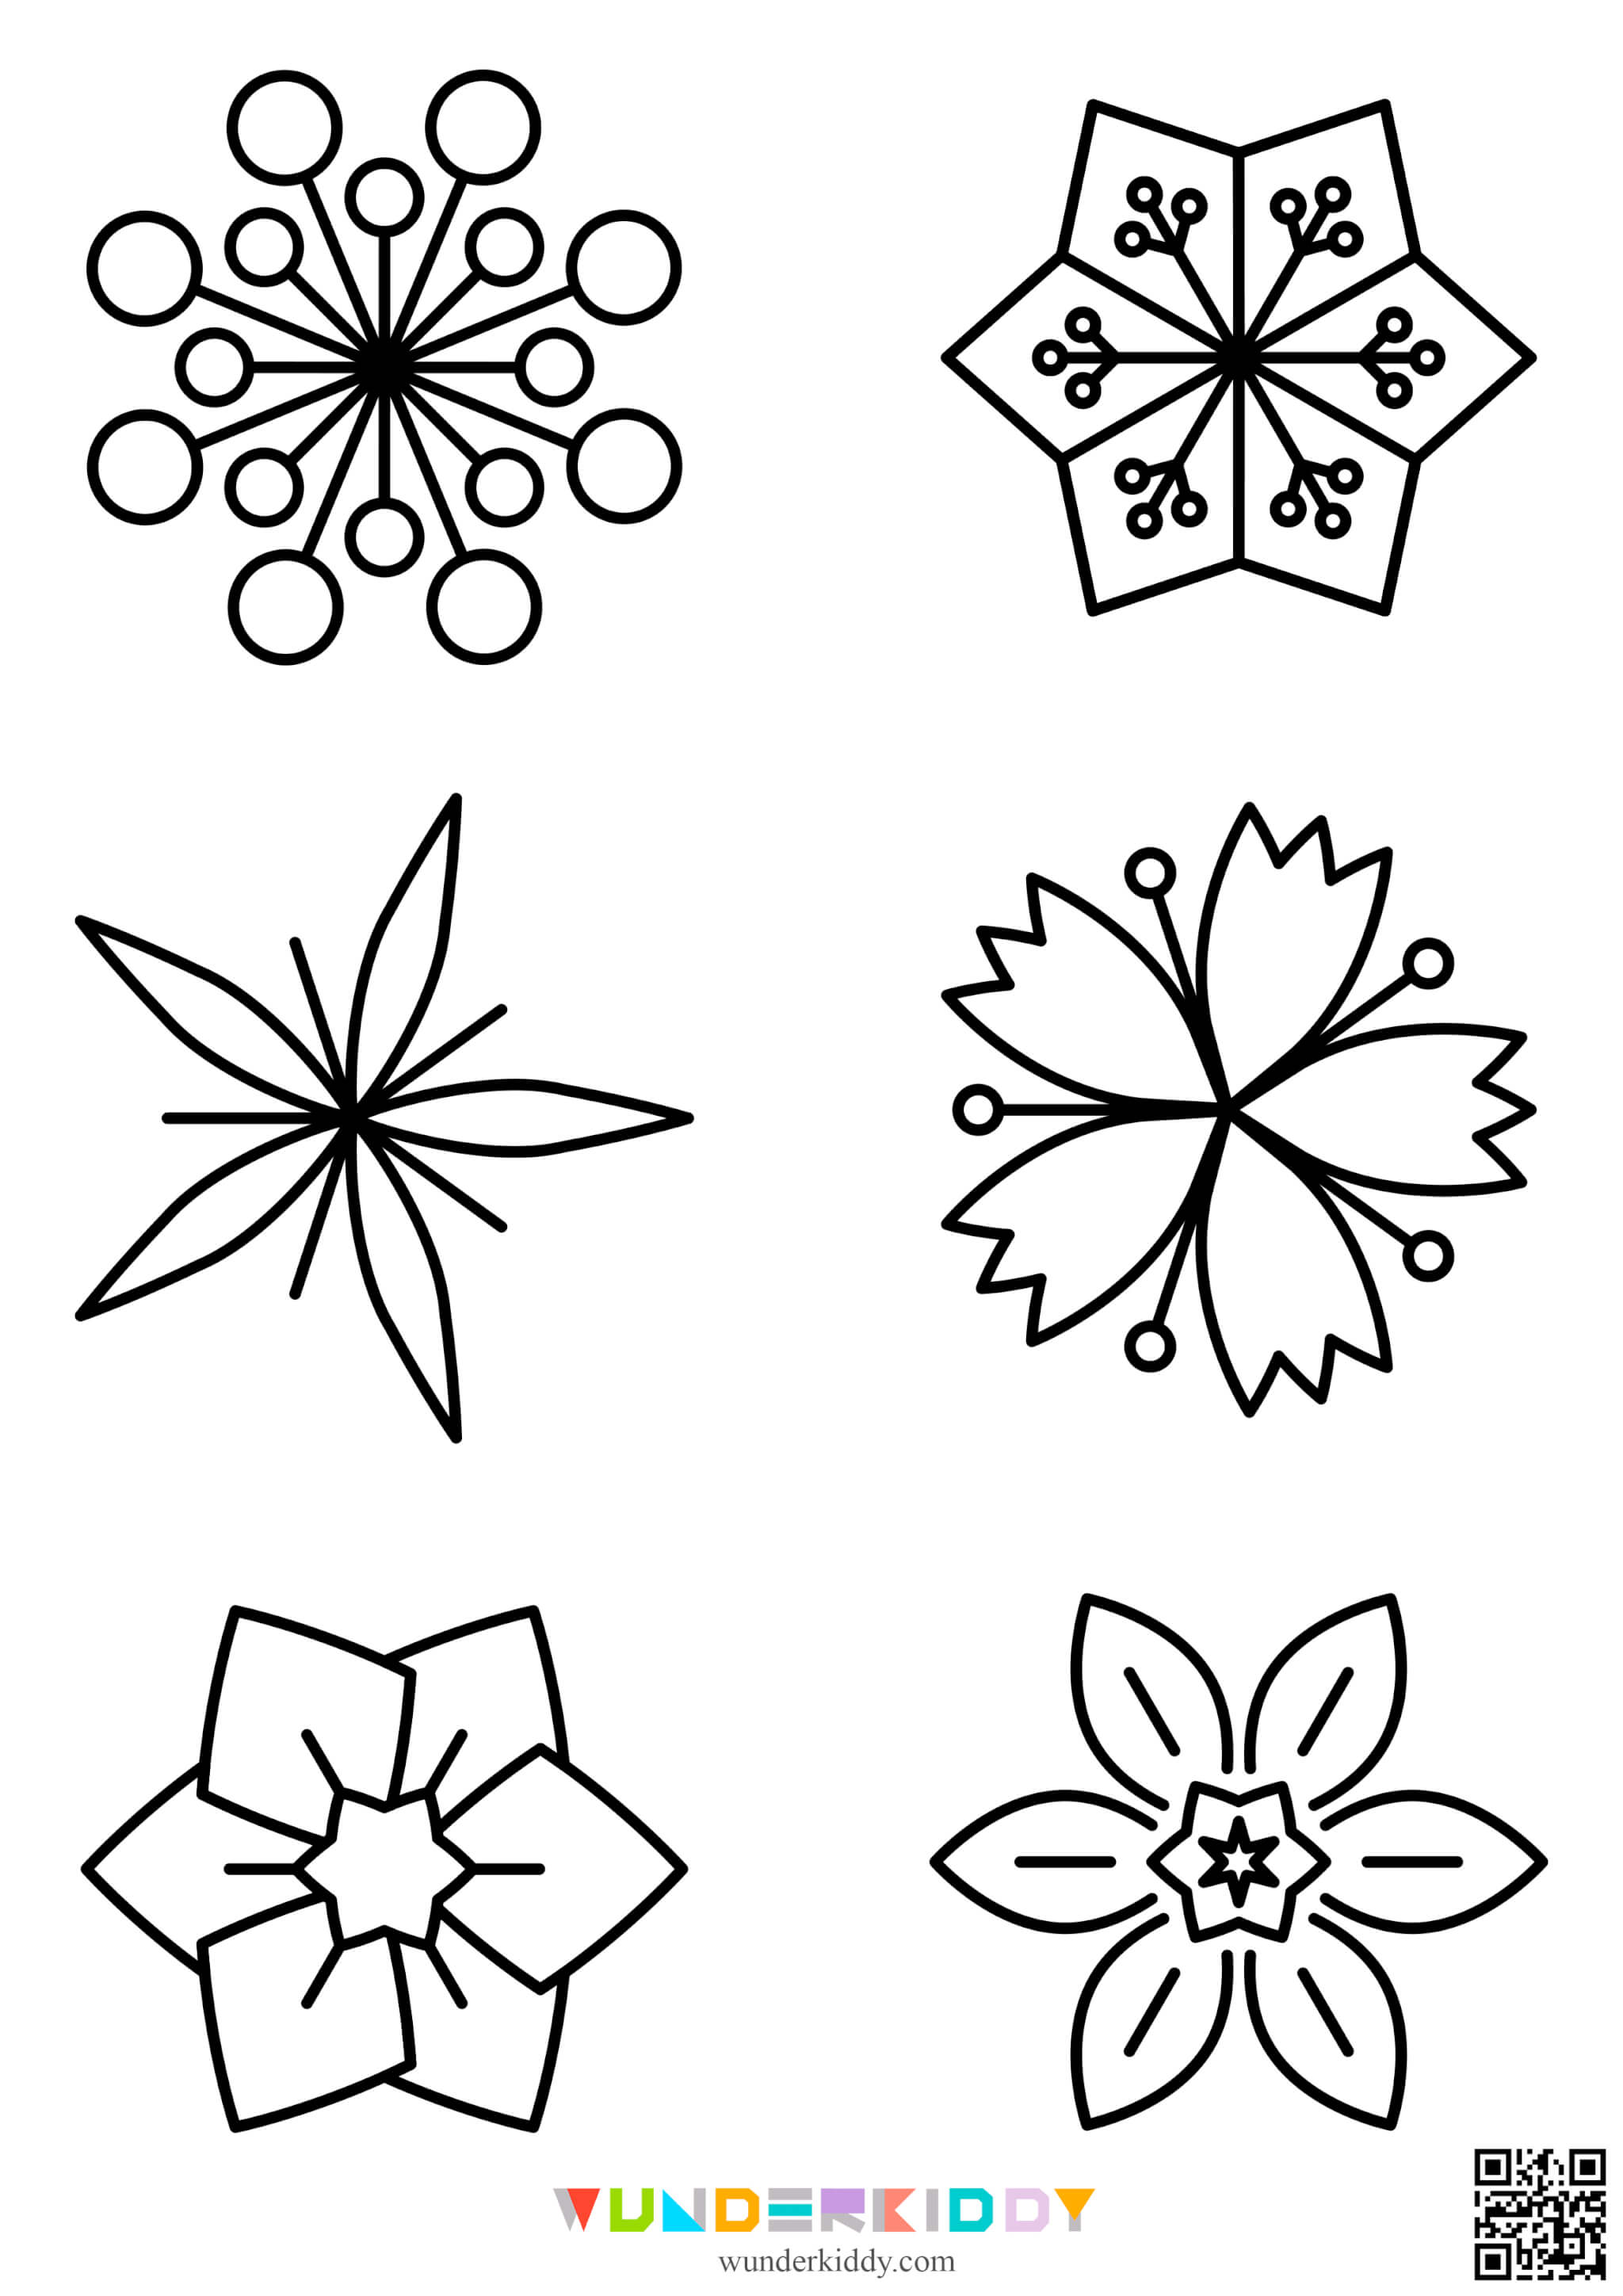 Simple Flower Templates - Image 4